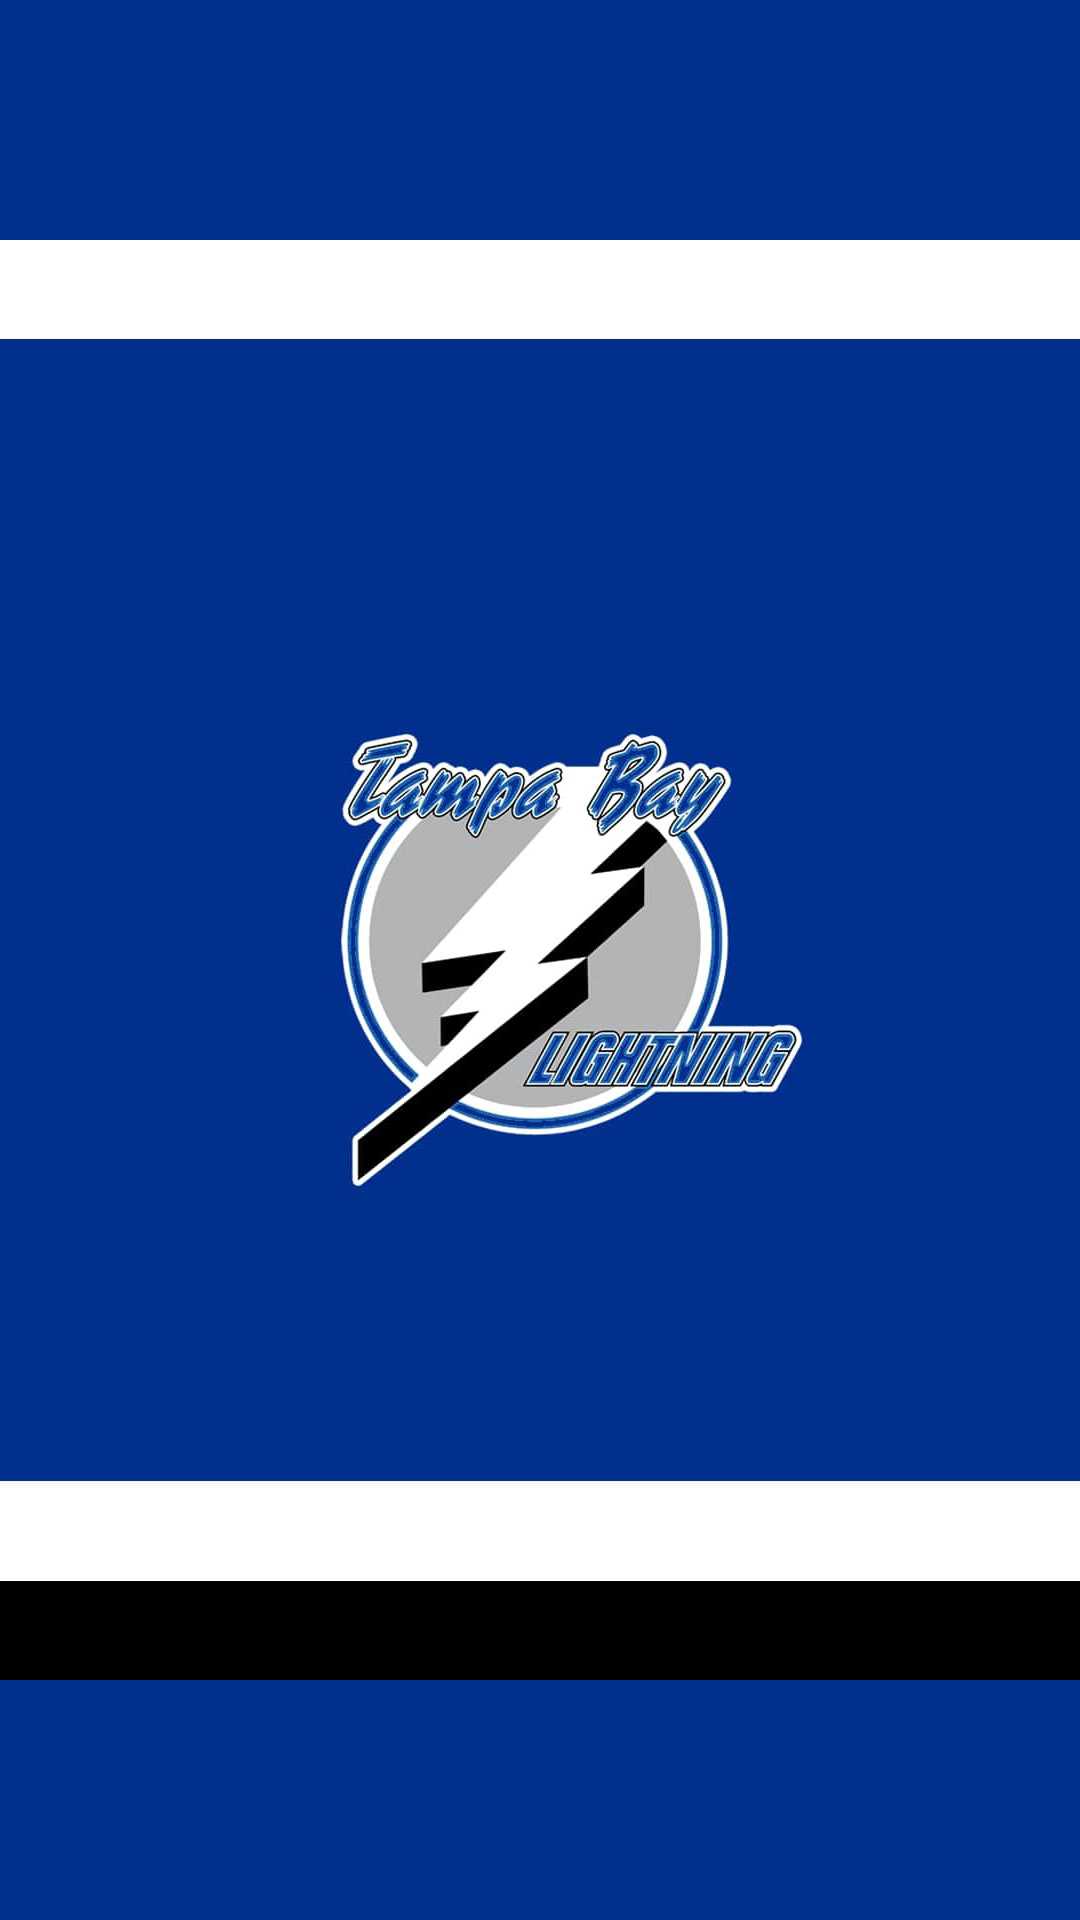 Tampa Bay Lightning (NHL) iPhone X/XS/XR Lock Screen Wallp…